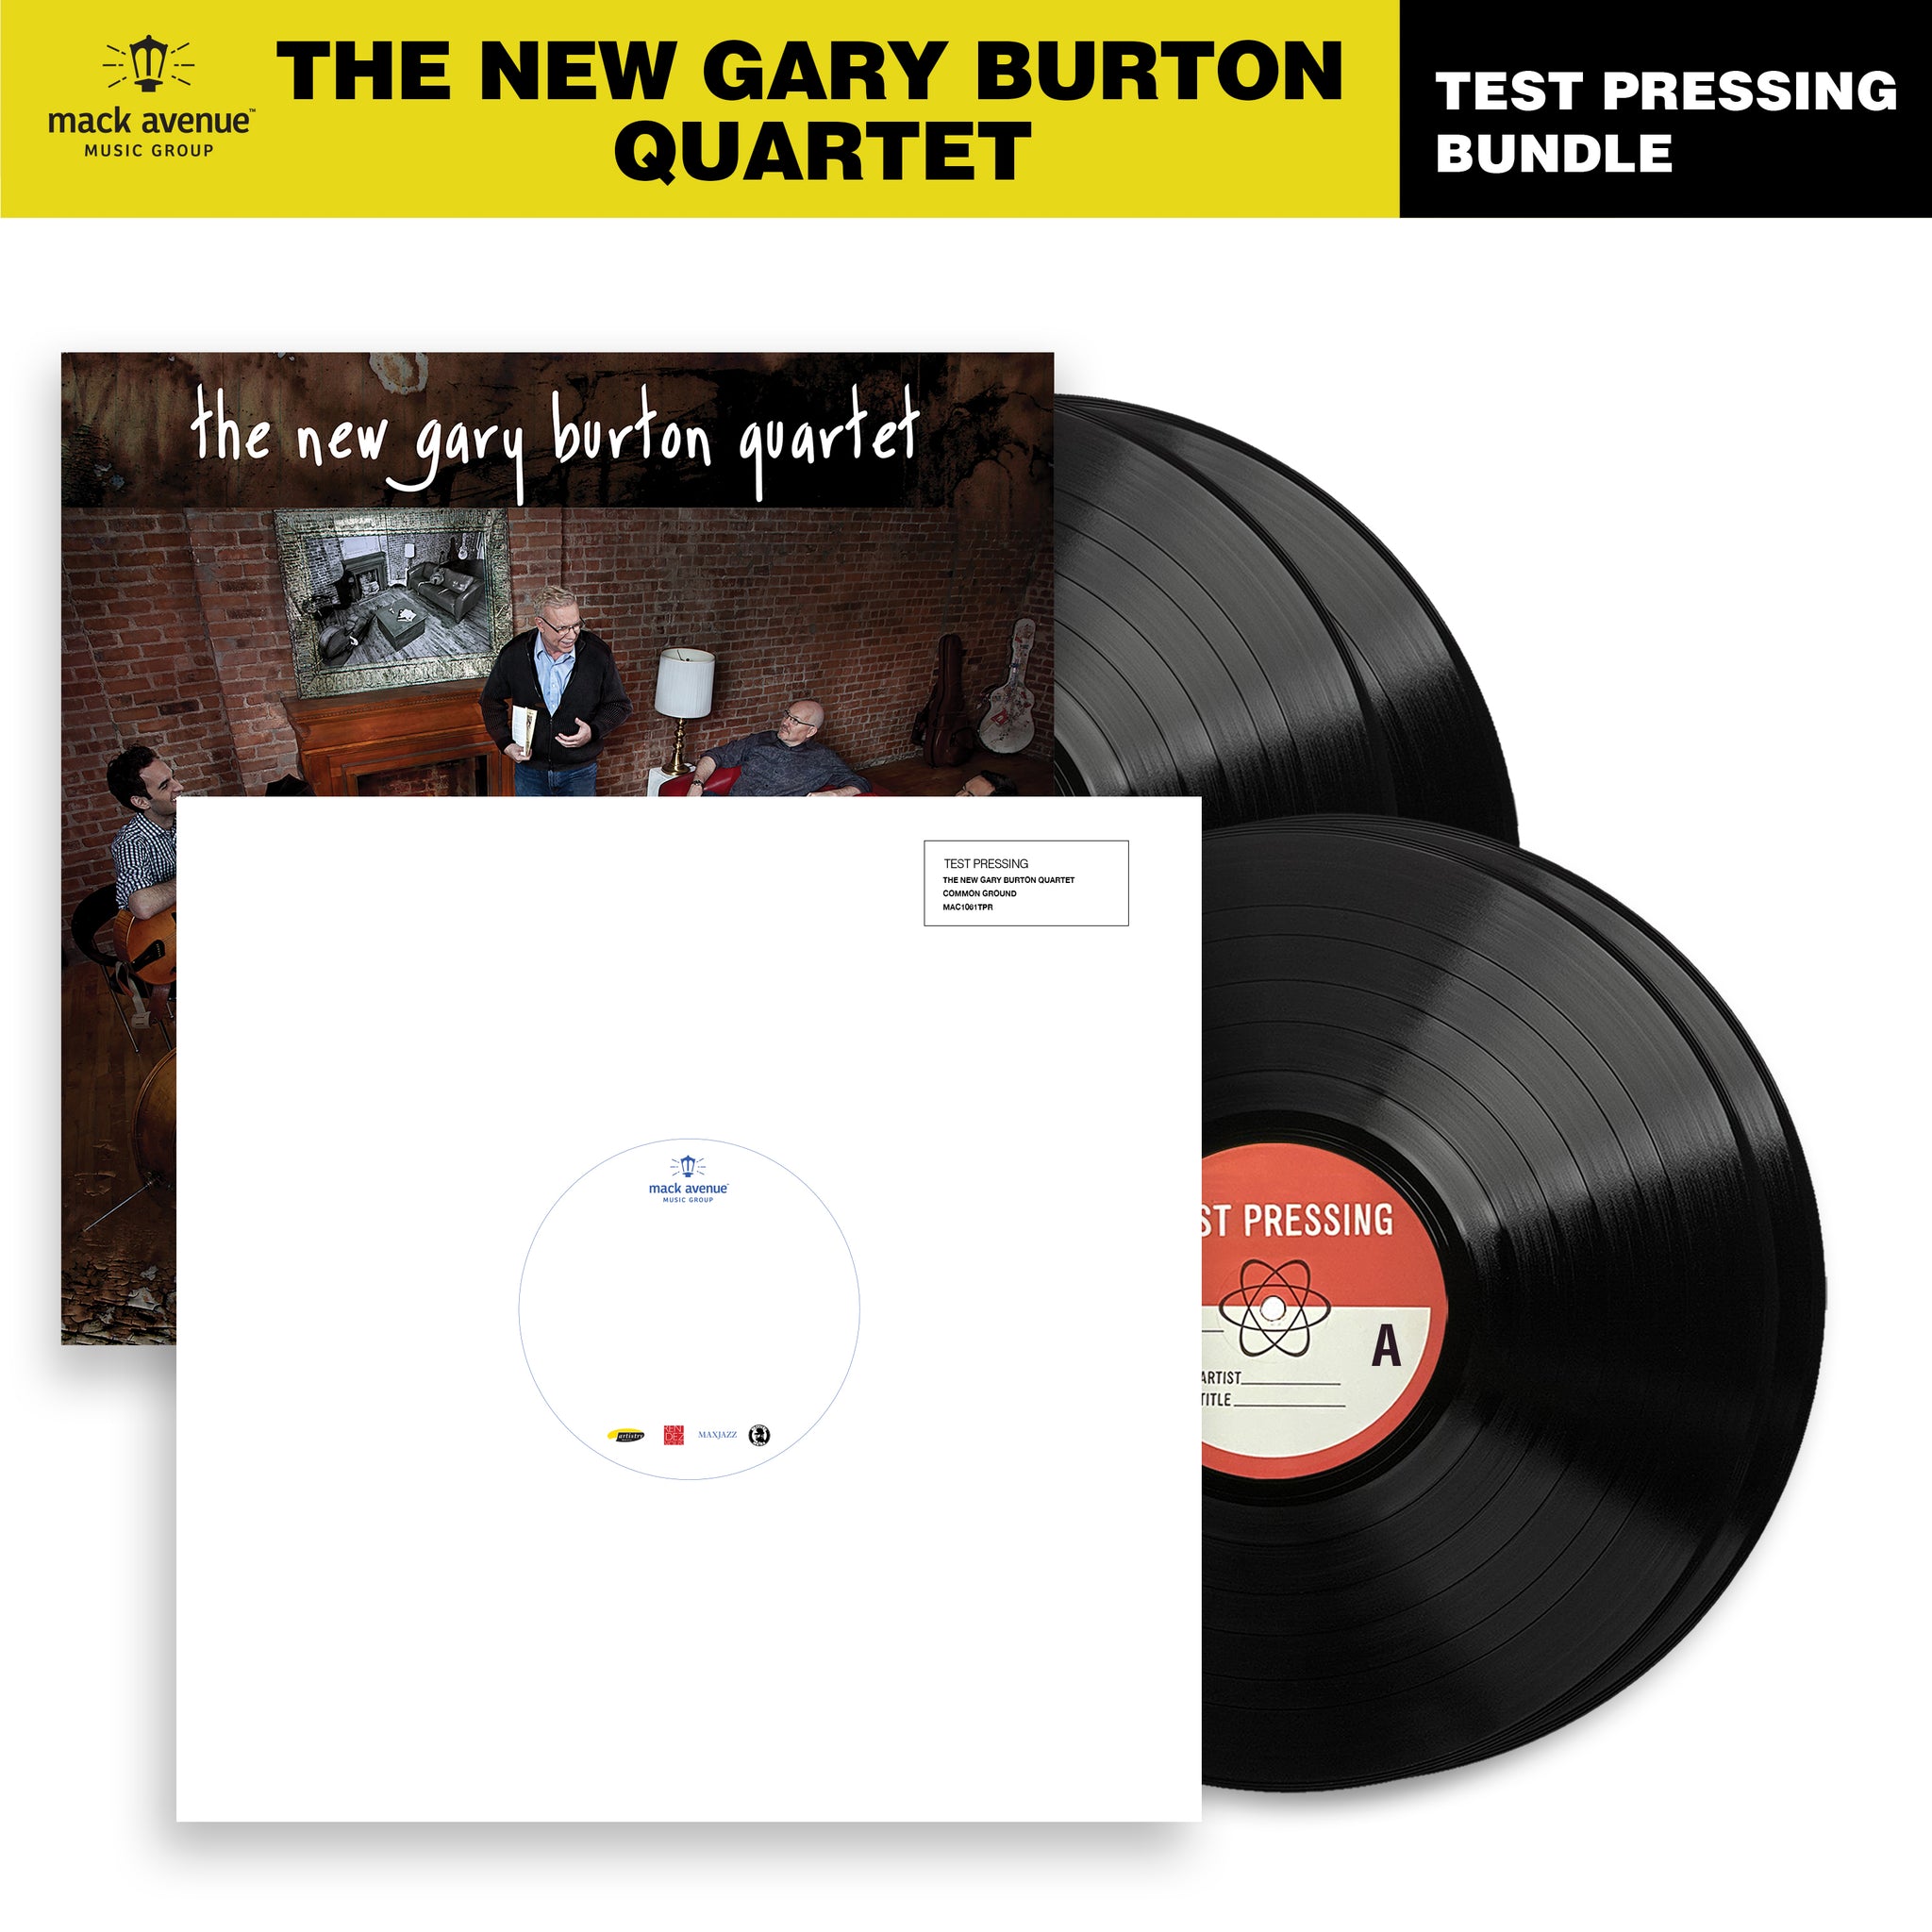 The New Gary Burton Quartet - Common Ground (Test Pressing Bundle)